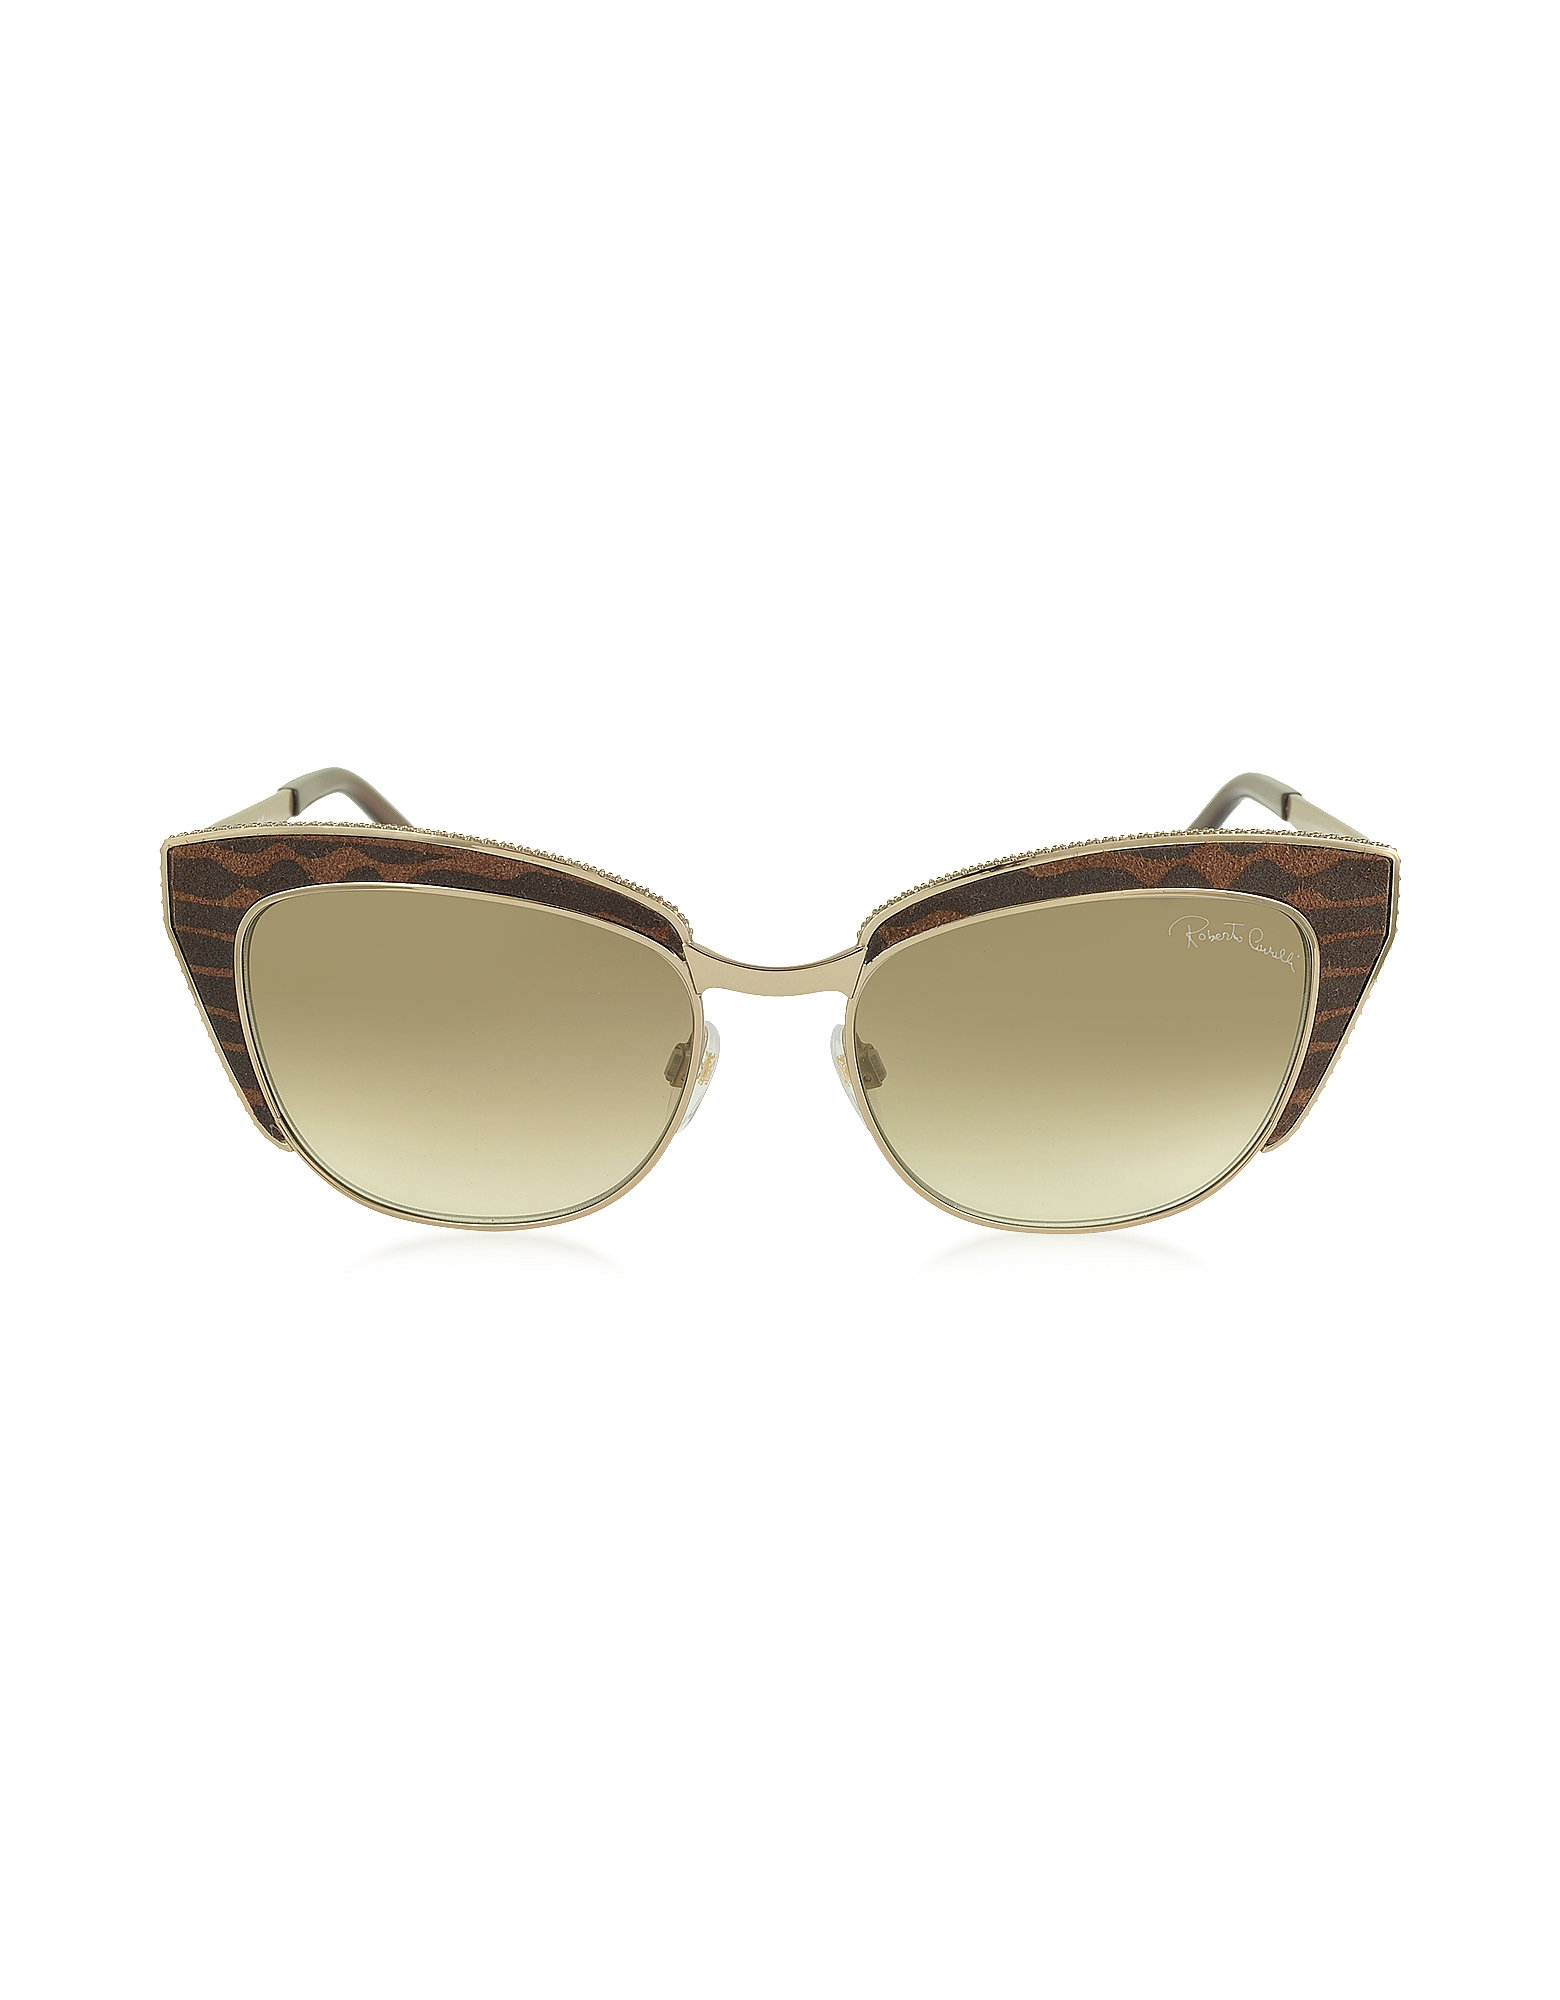 Roberto Cavalli Sunglasses SUALOCIN 973S Gold Metal and Brown Animal Print Acetate Cat Eye Sunglasses